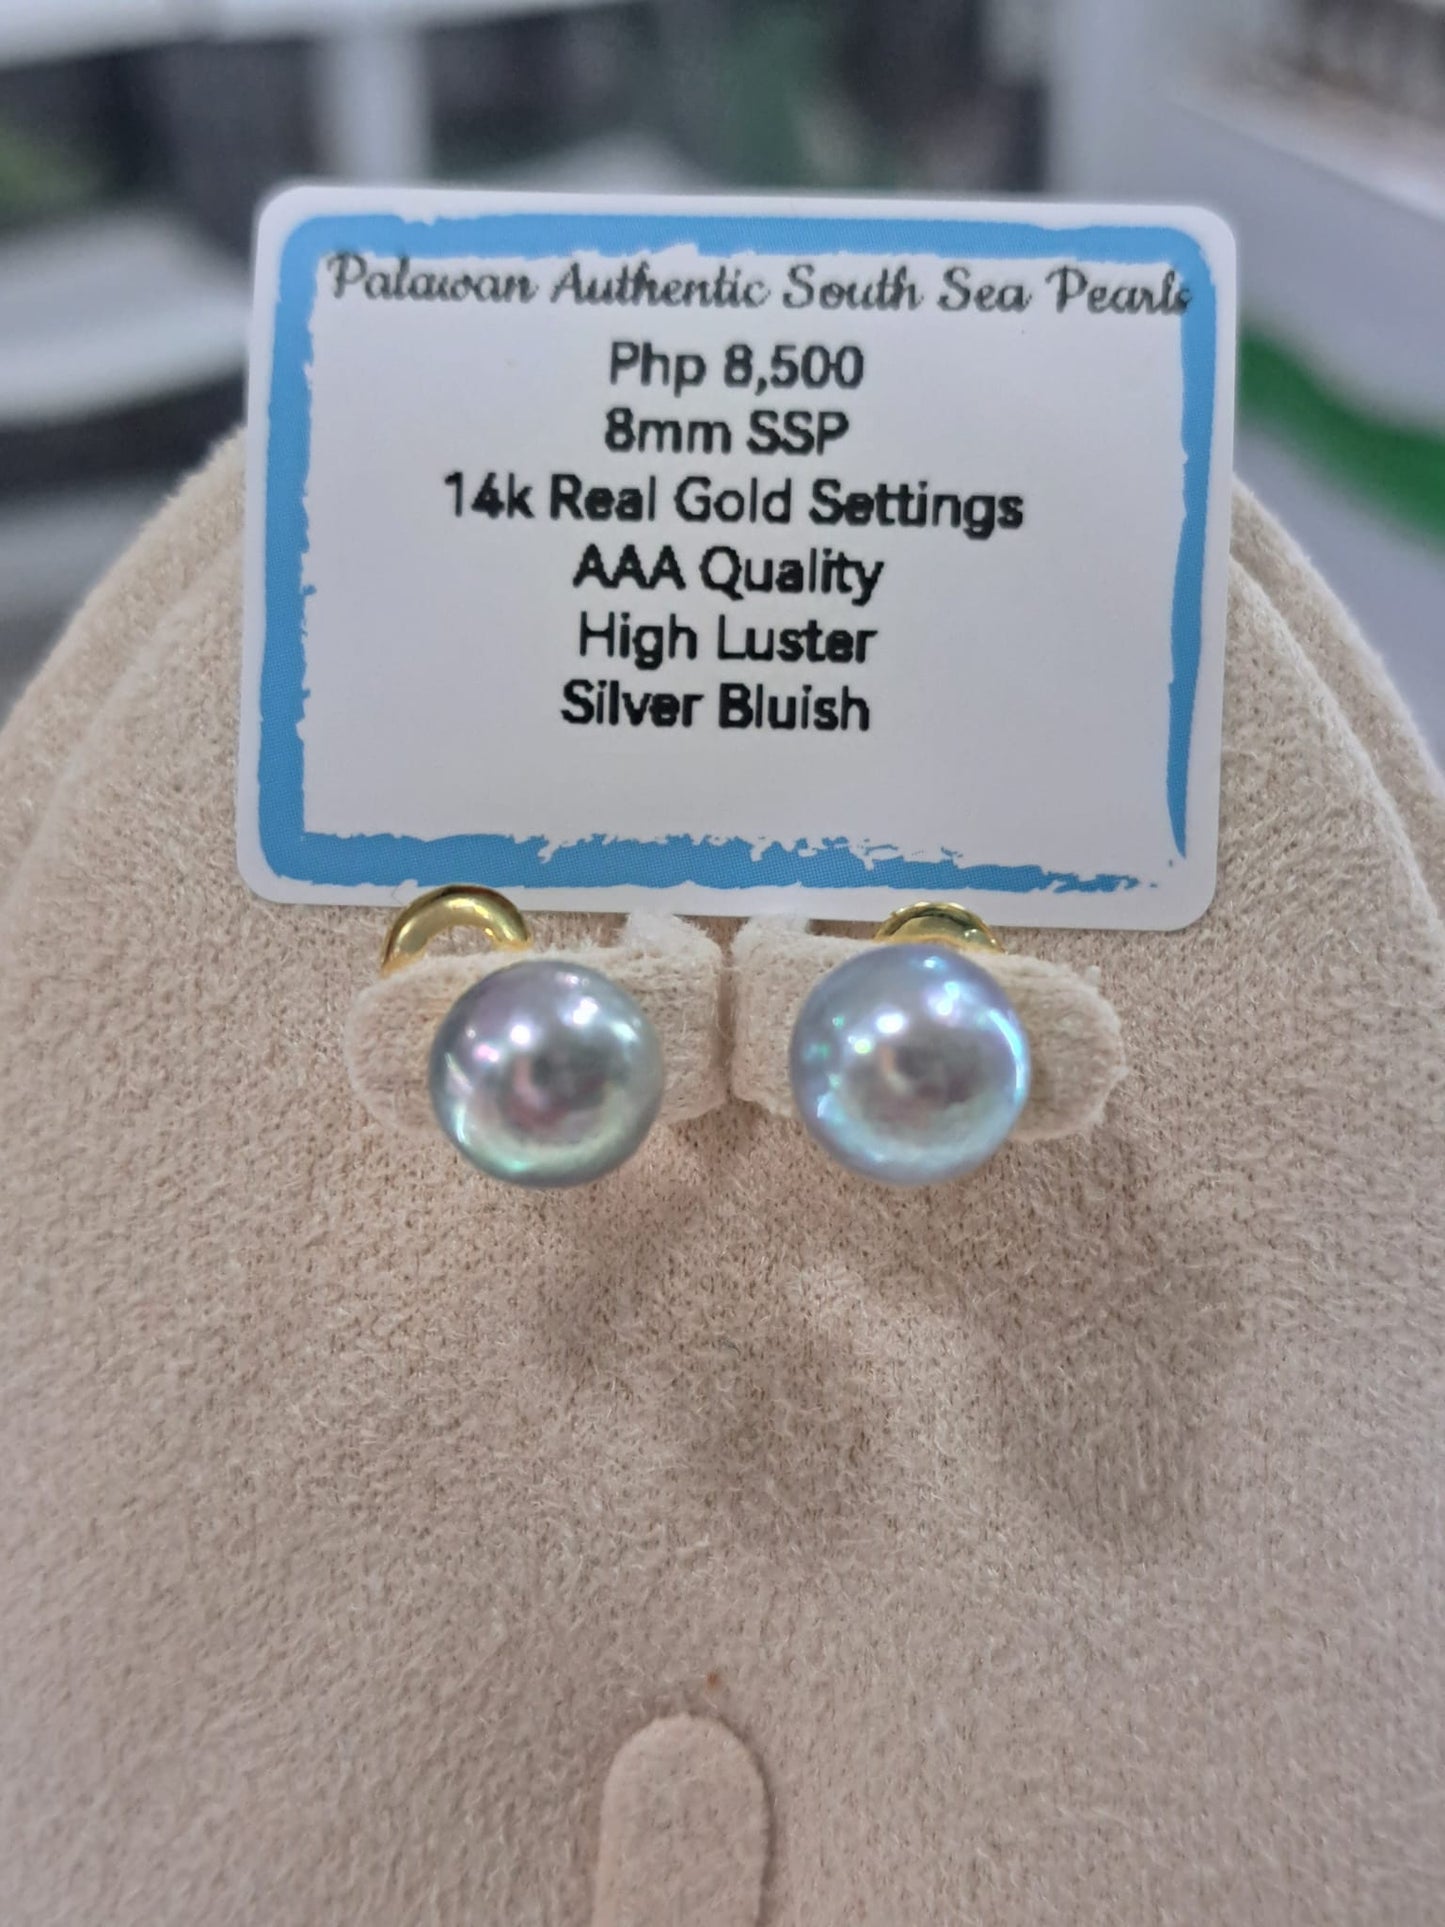 8mm Silver Bluish South Sea Pearls Earrings in 14K Gold